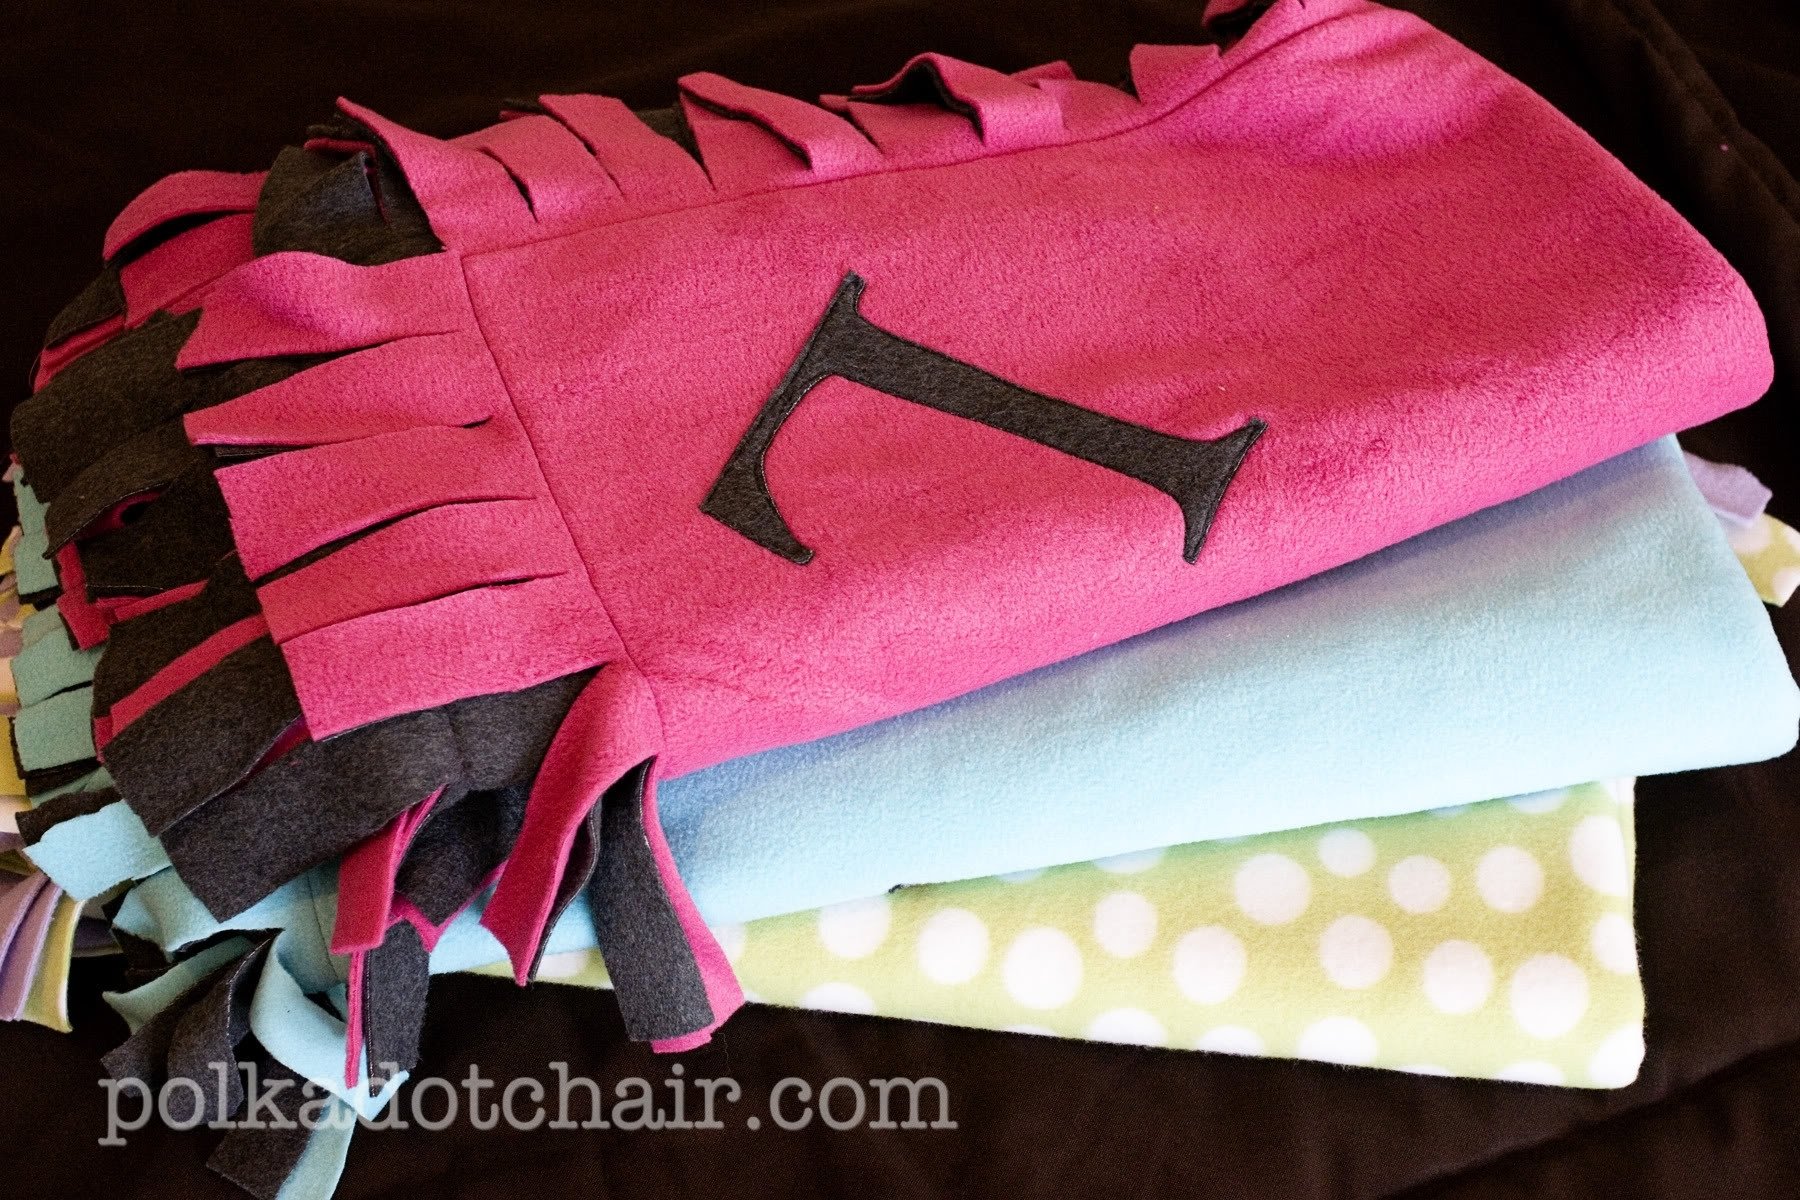 10 Nice No Sew Fleece Blanket Ideas easy peasy fleece blanket tutorial the polkadot chair 2022